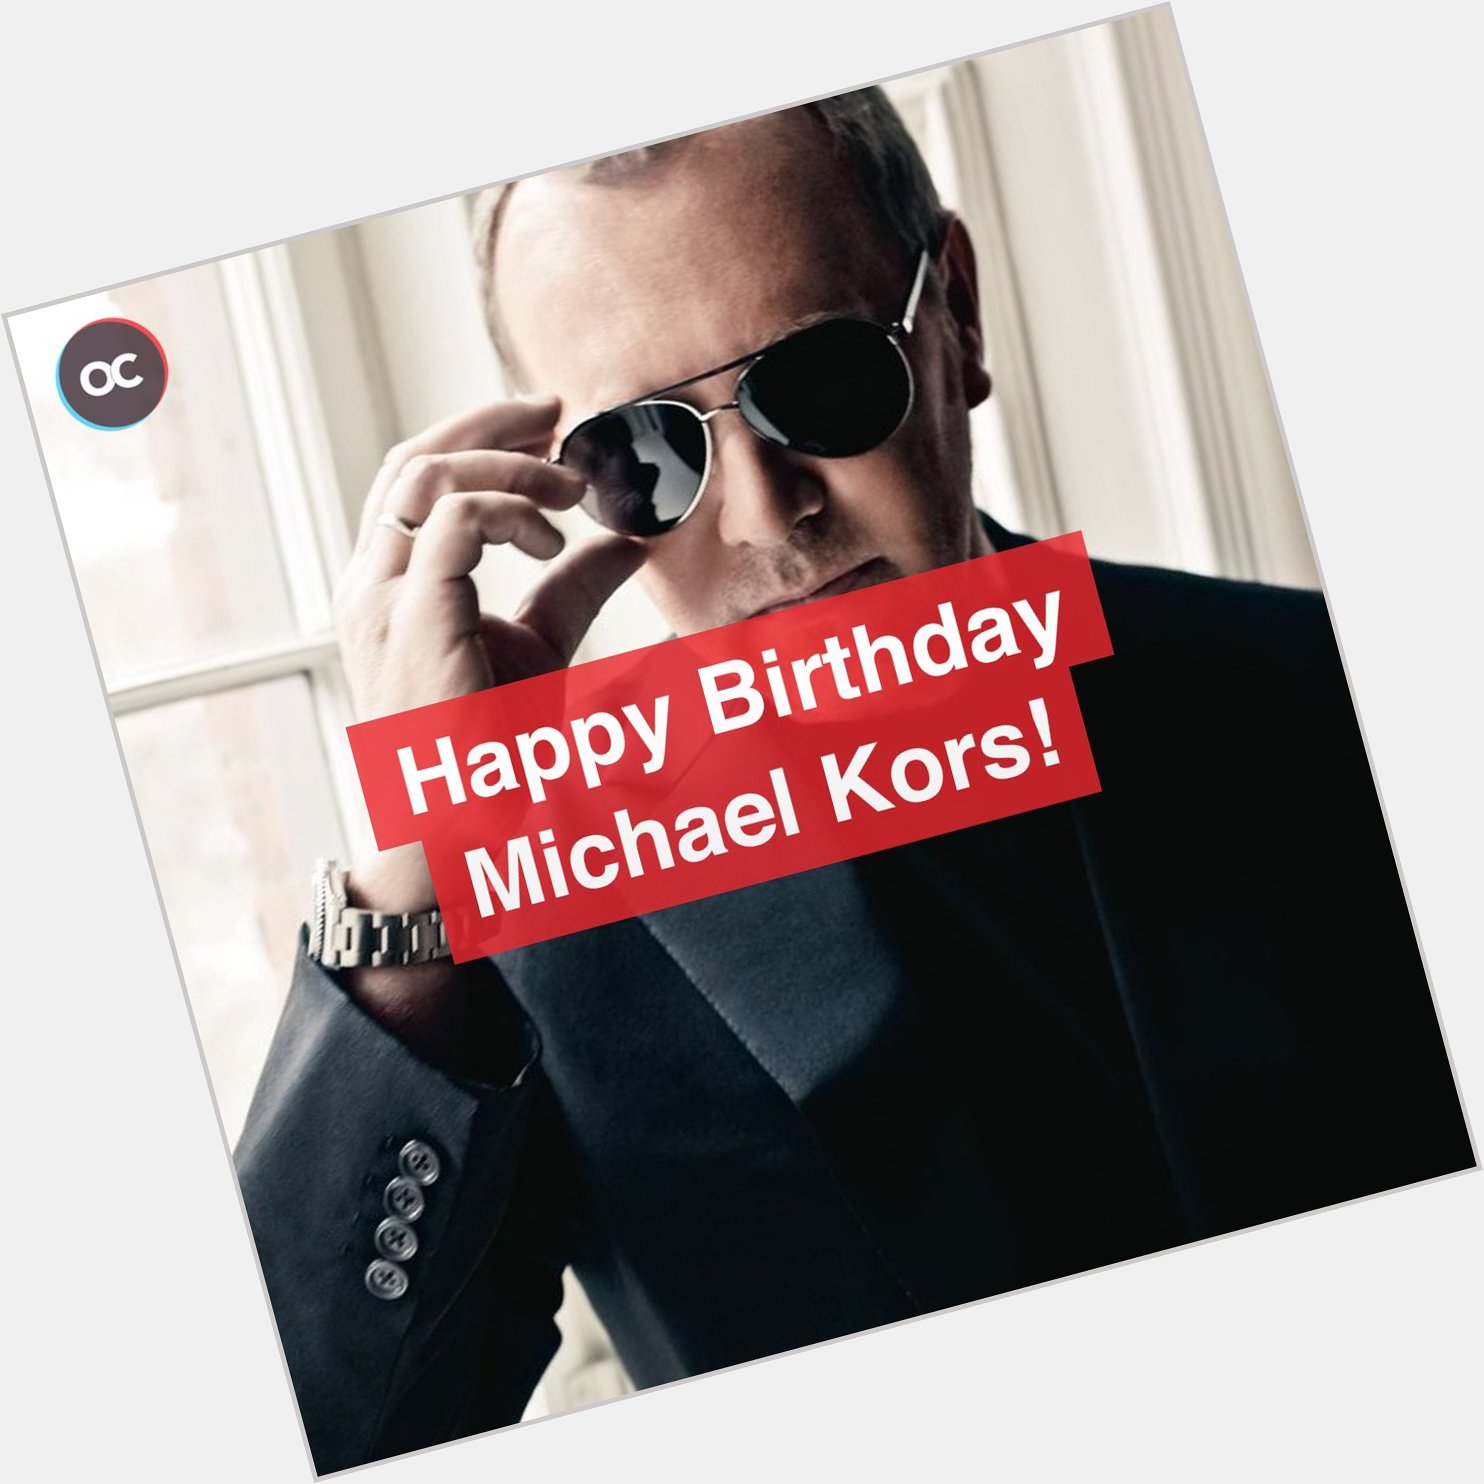 Happy Birthday Michael Kors! 